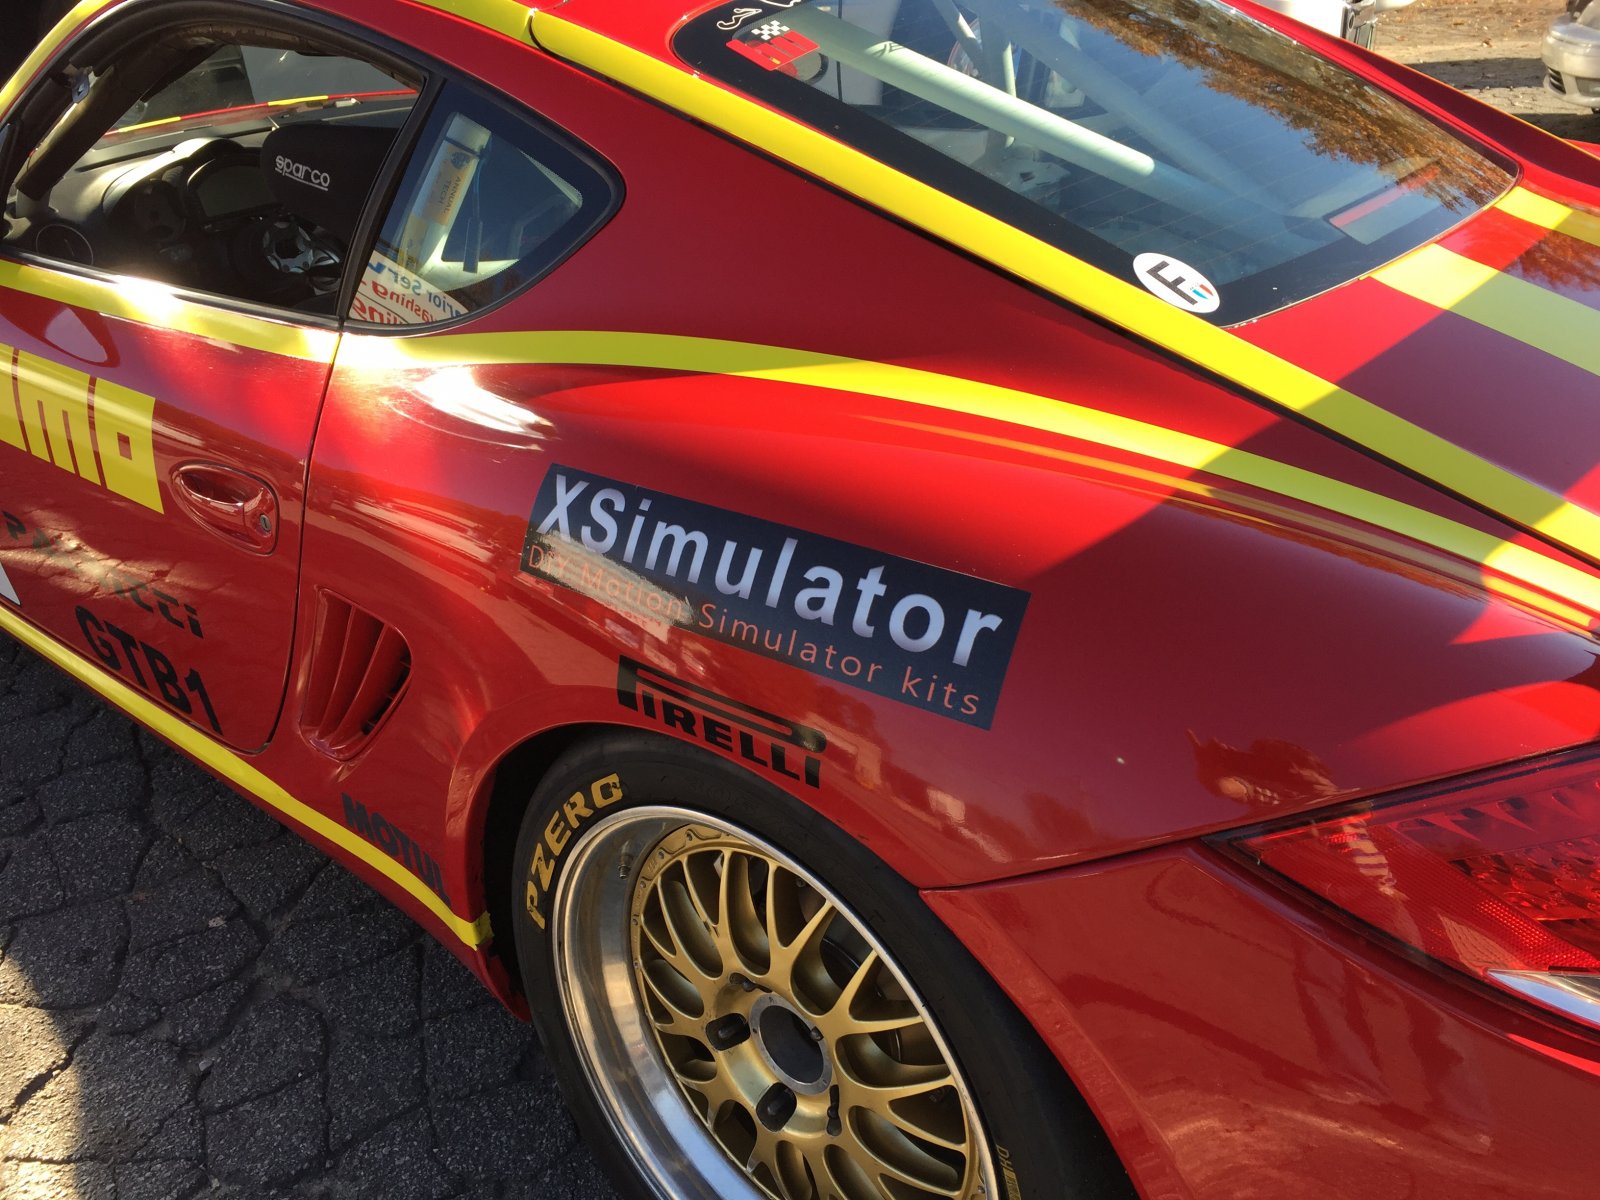 XSimulator at Daytona International Speedway